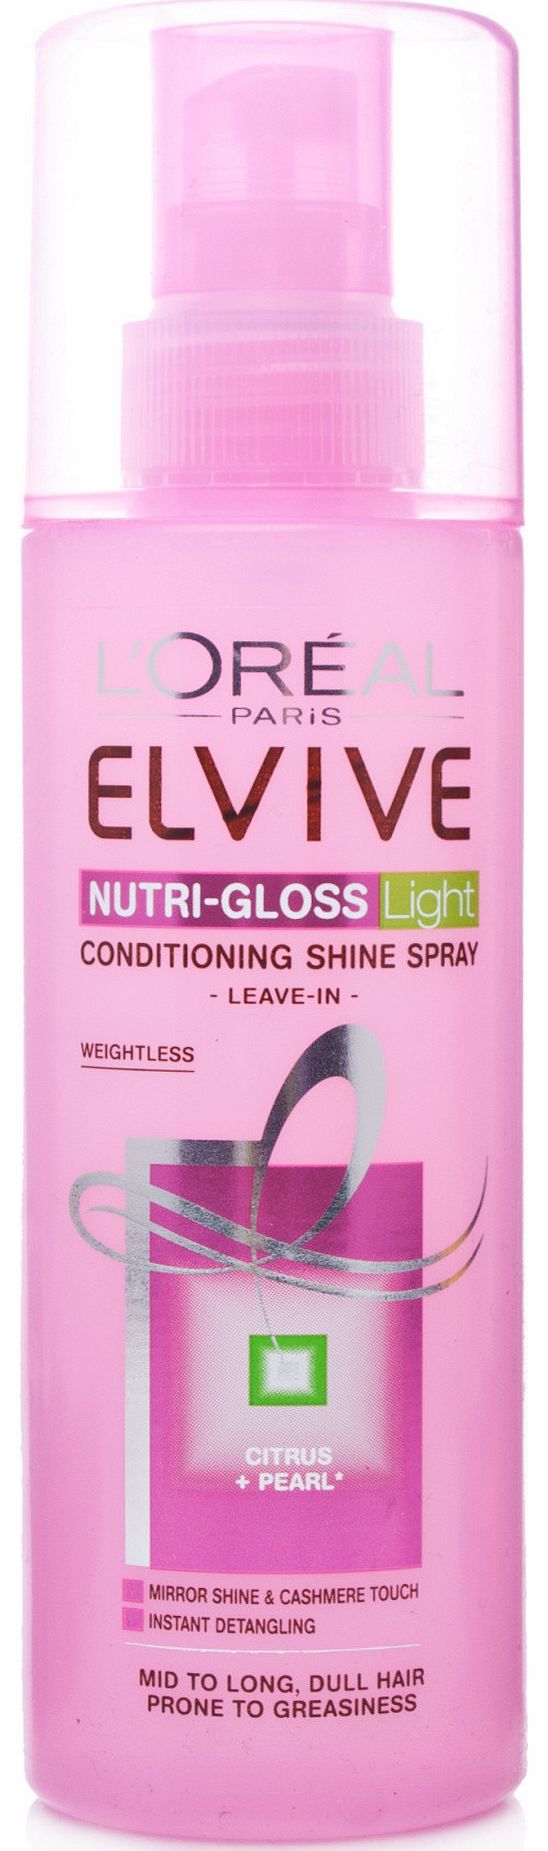 L'Oreal Elvive Nutri-Gloss Light